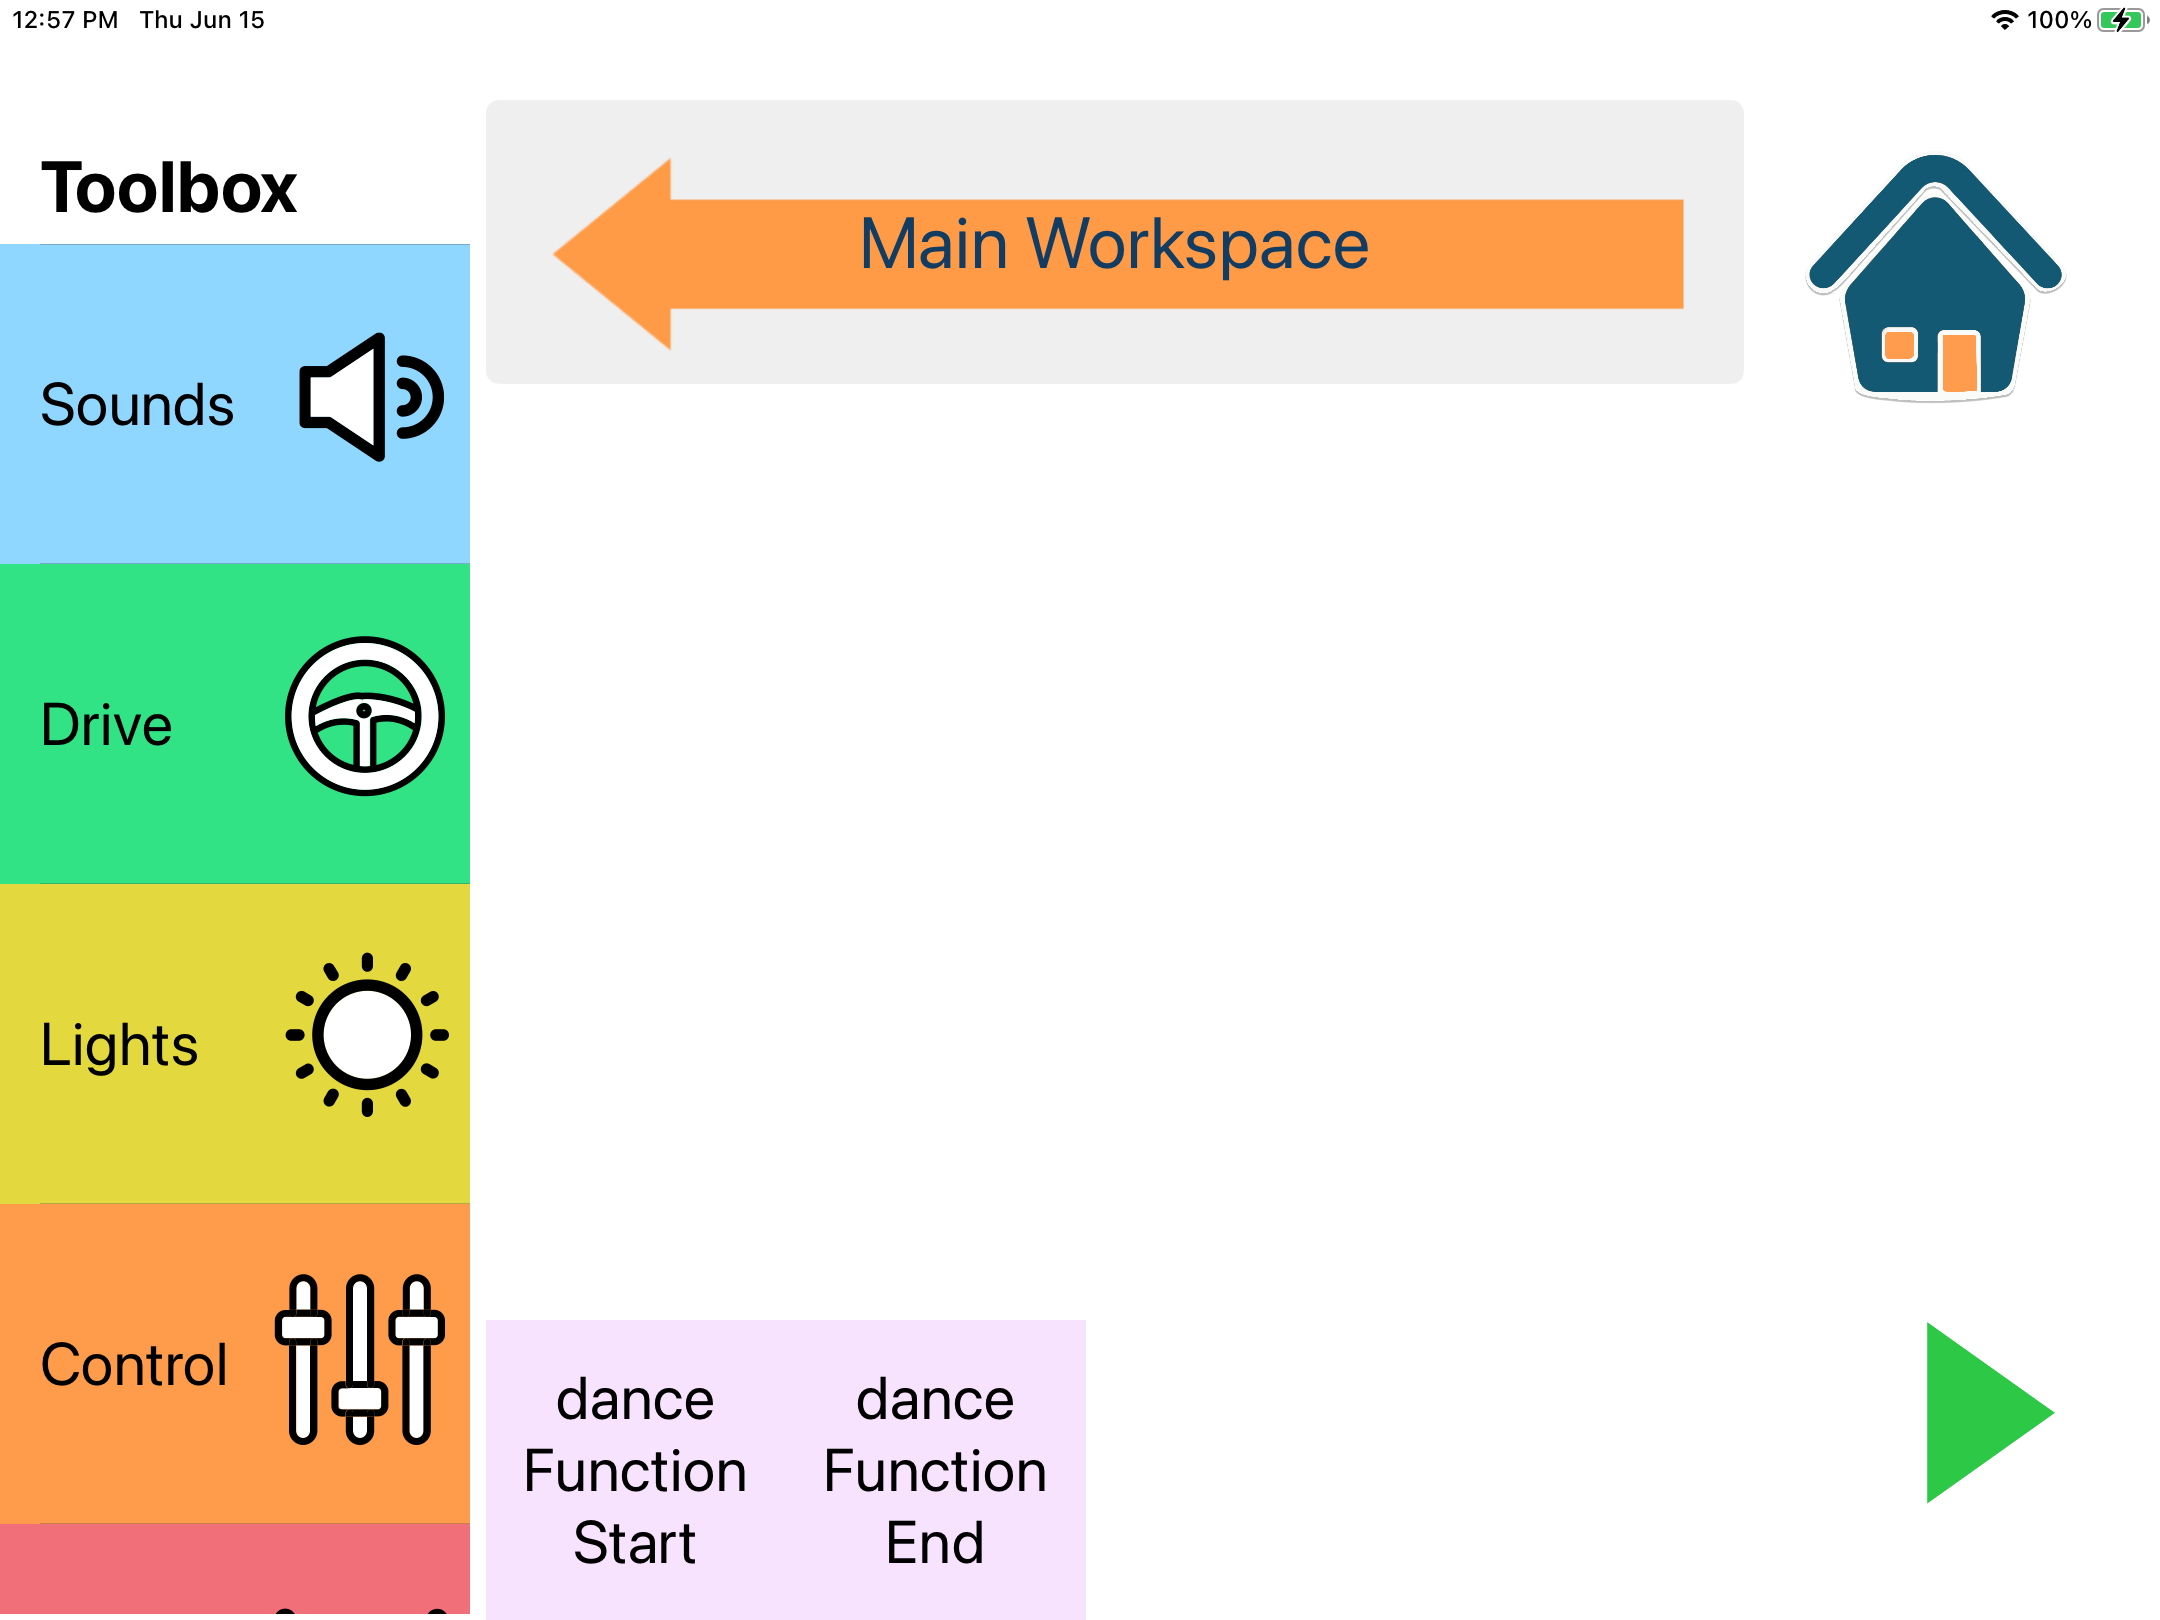 Function Workspace 